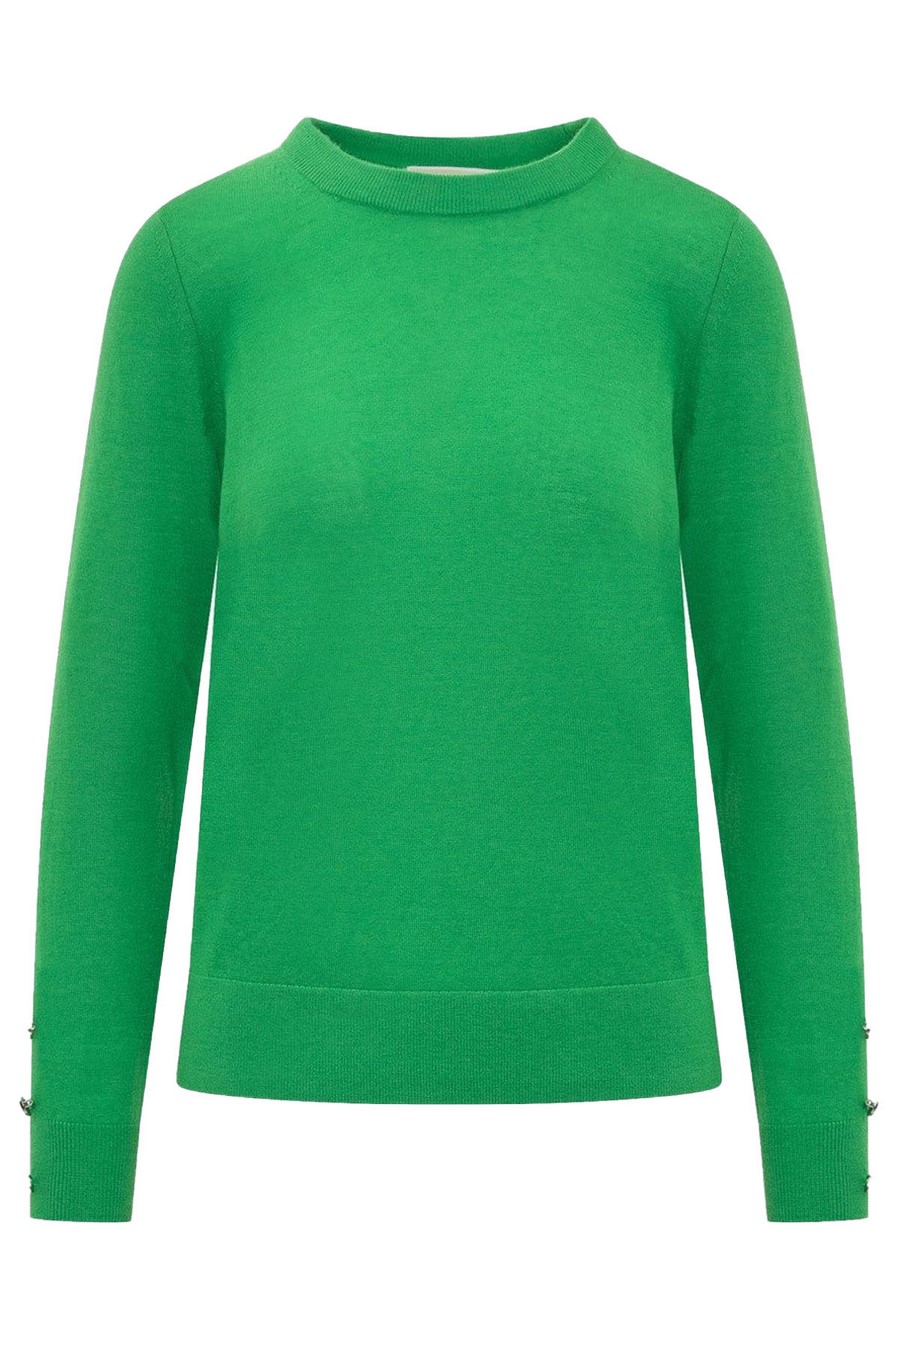 MICHAEL KORS Sweaters | ViganoBoutique.com